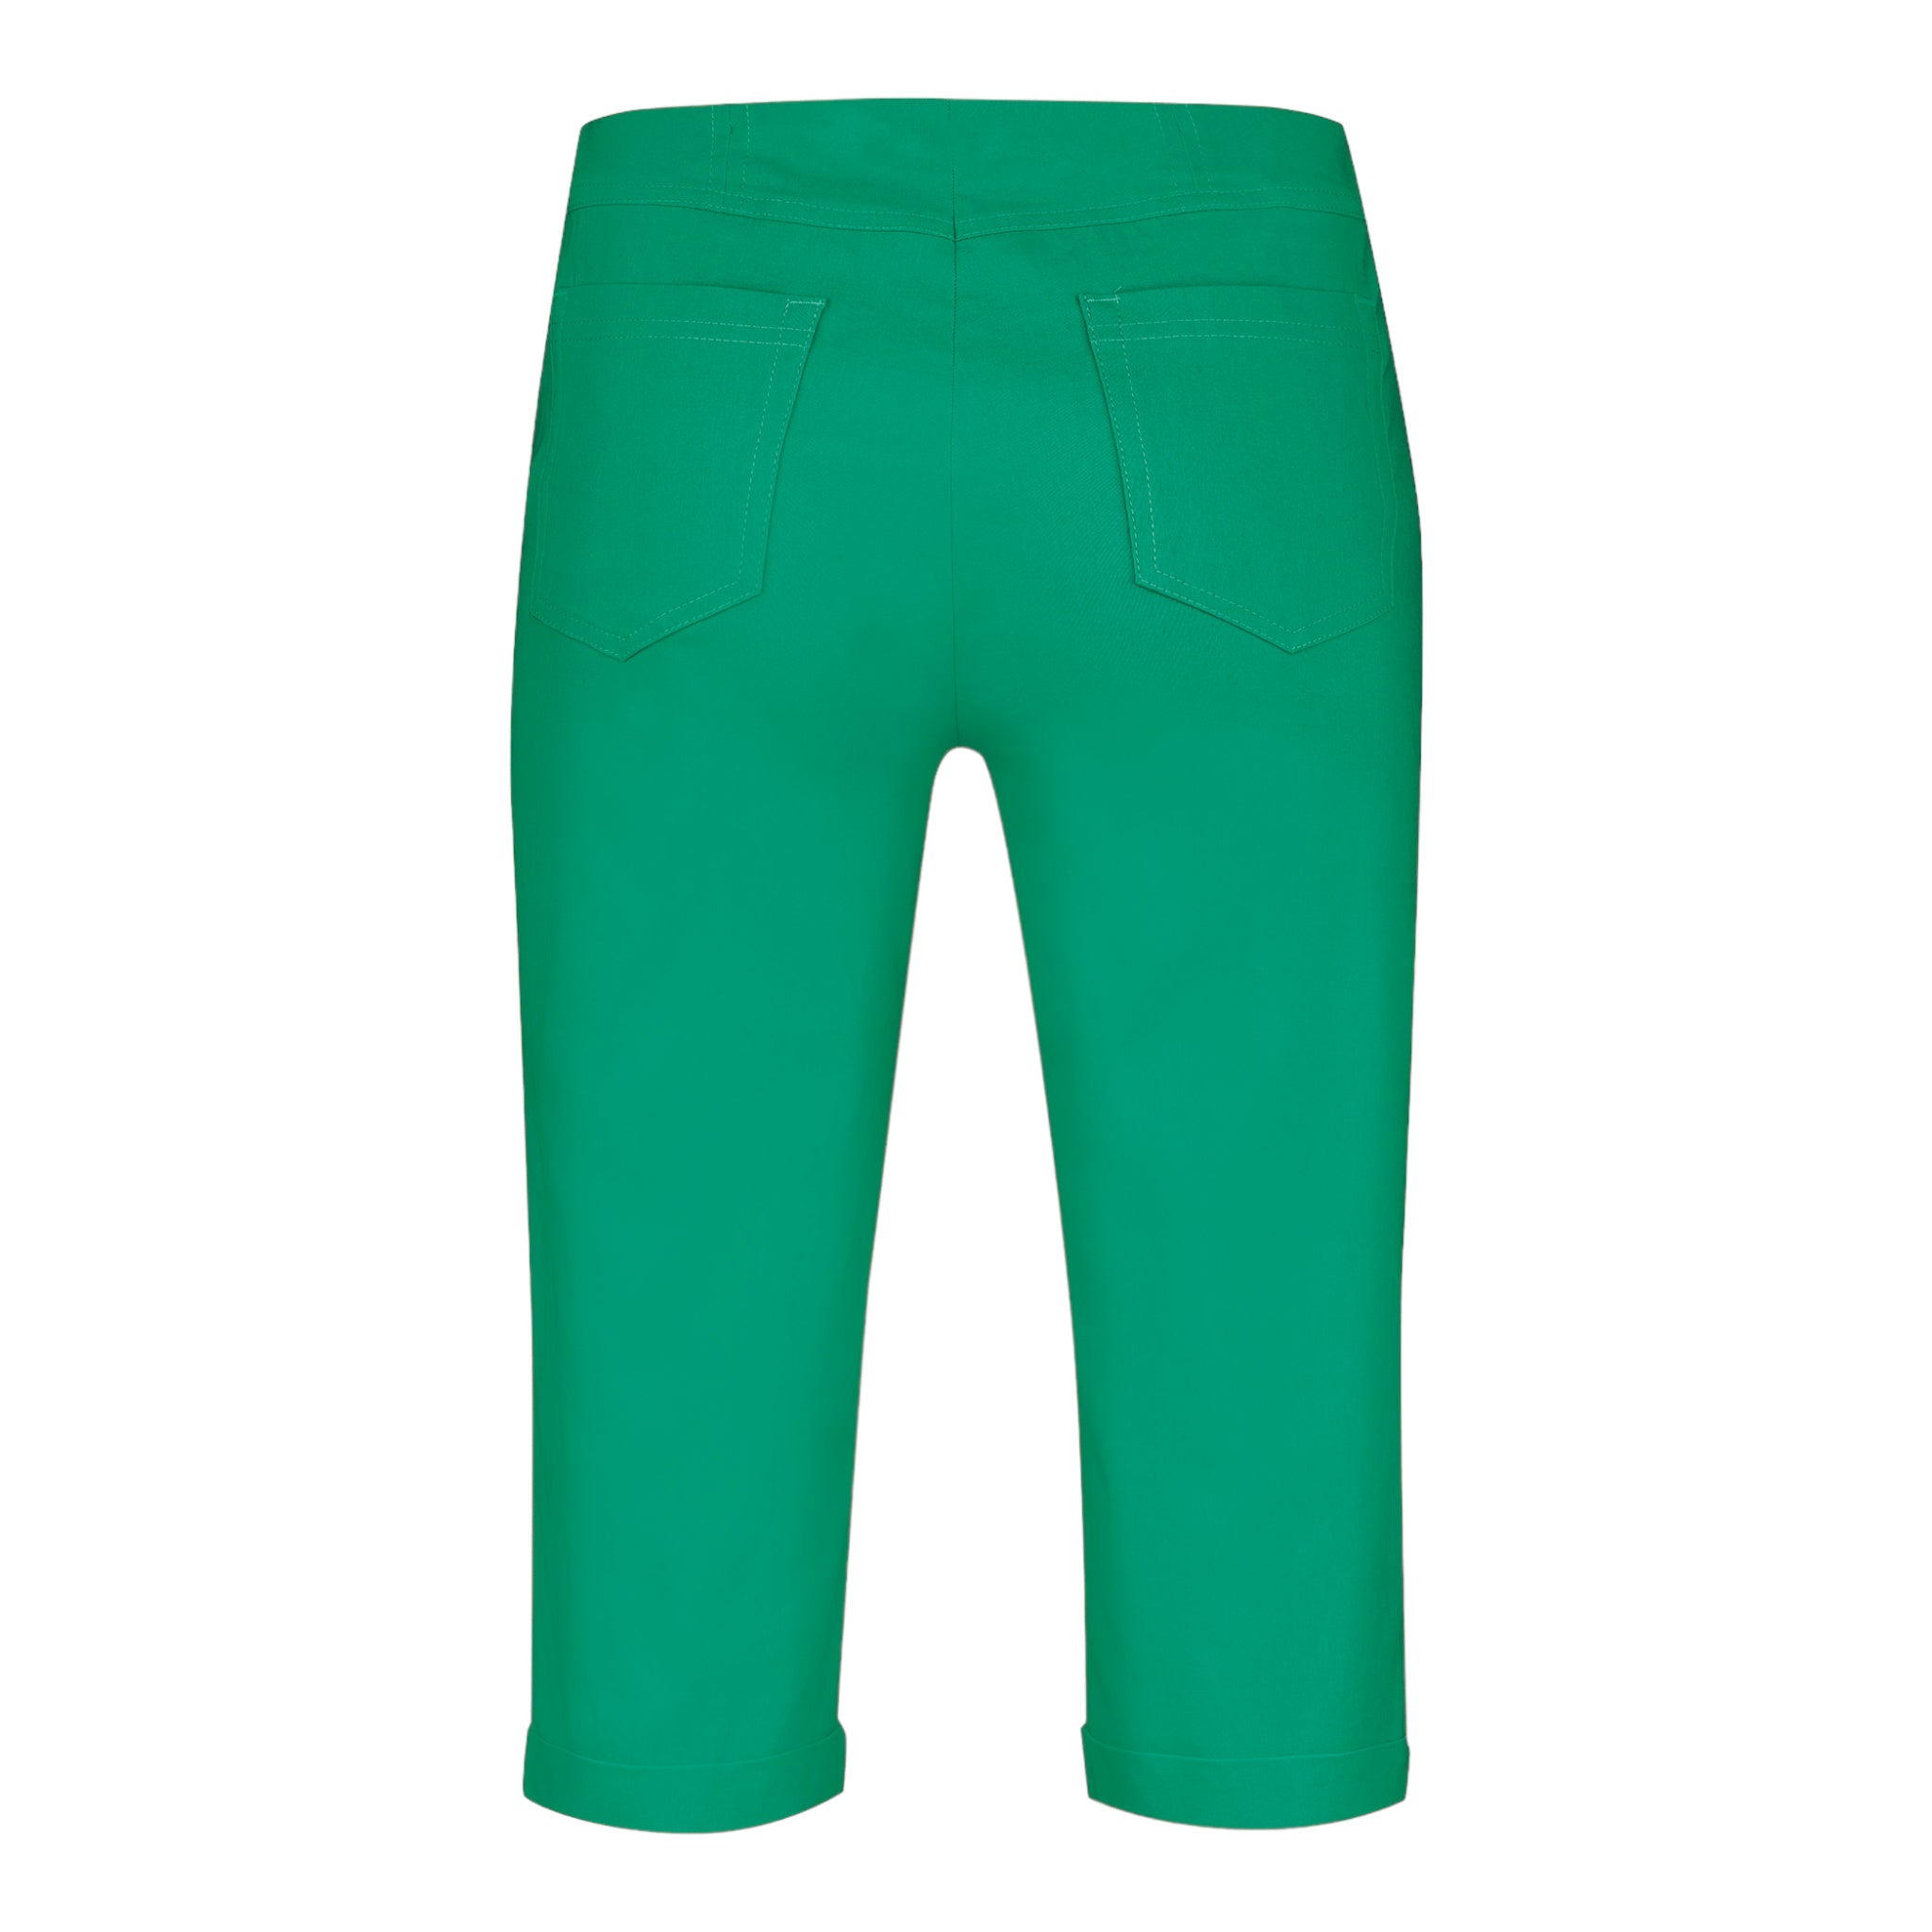 Robell-Bella-05-Bermuda-Shorts-Emerand-Green-51625-843-product-back-view